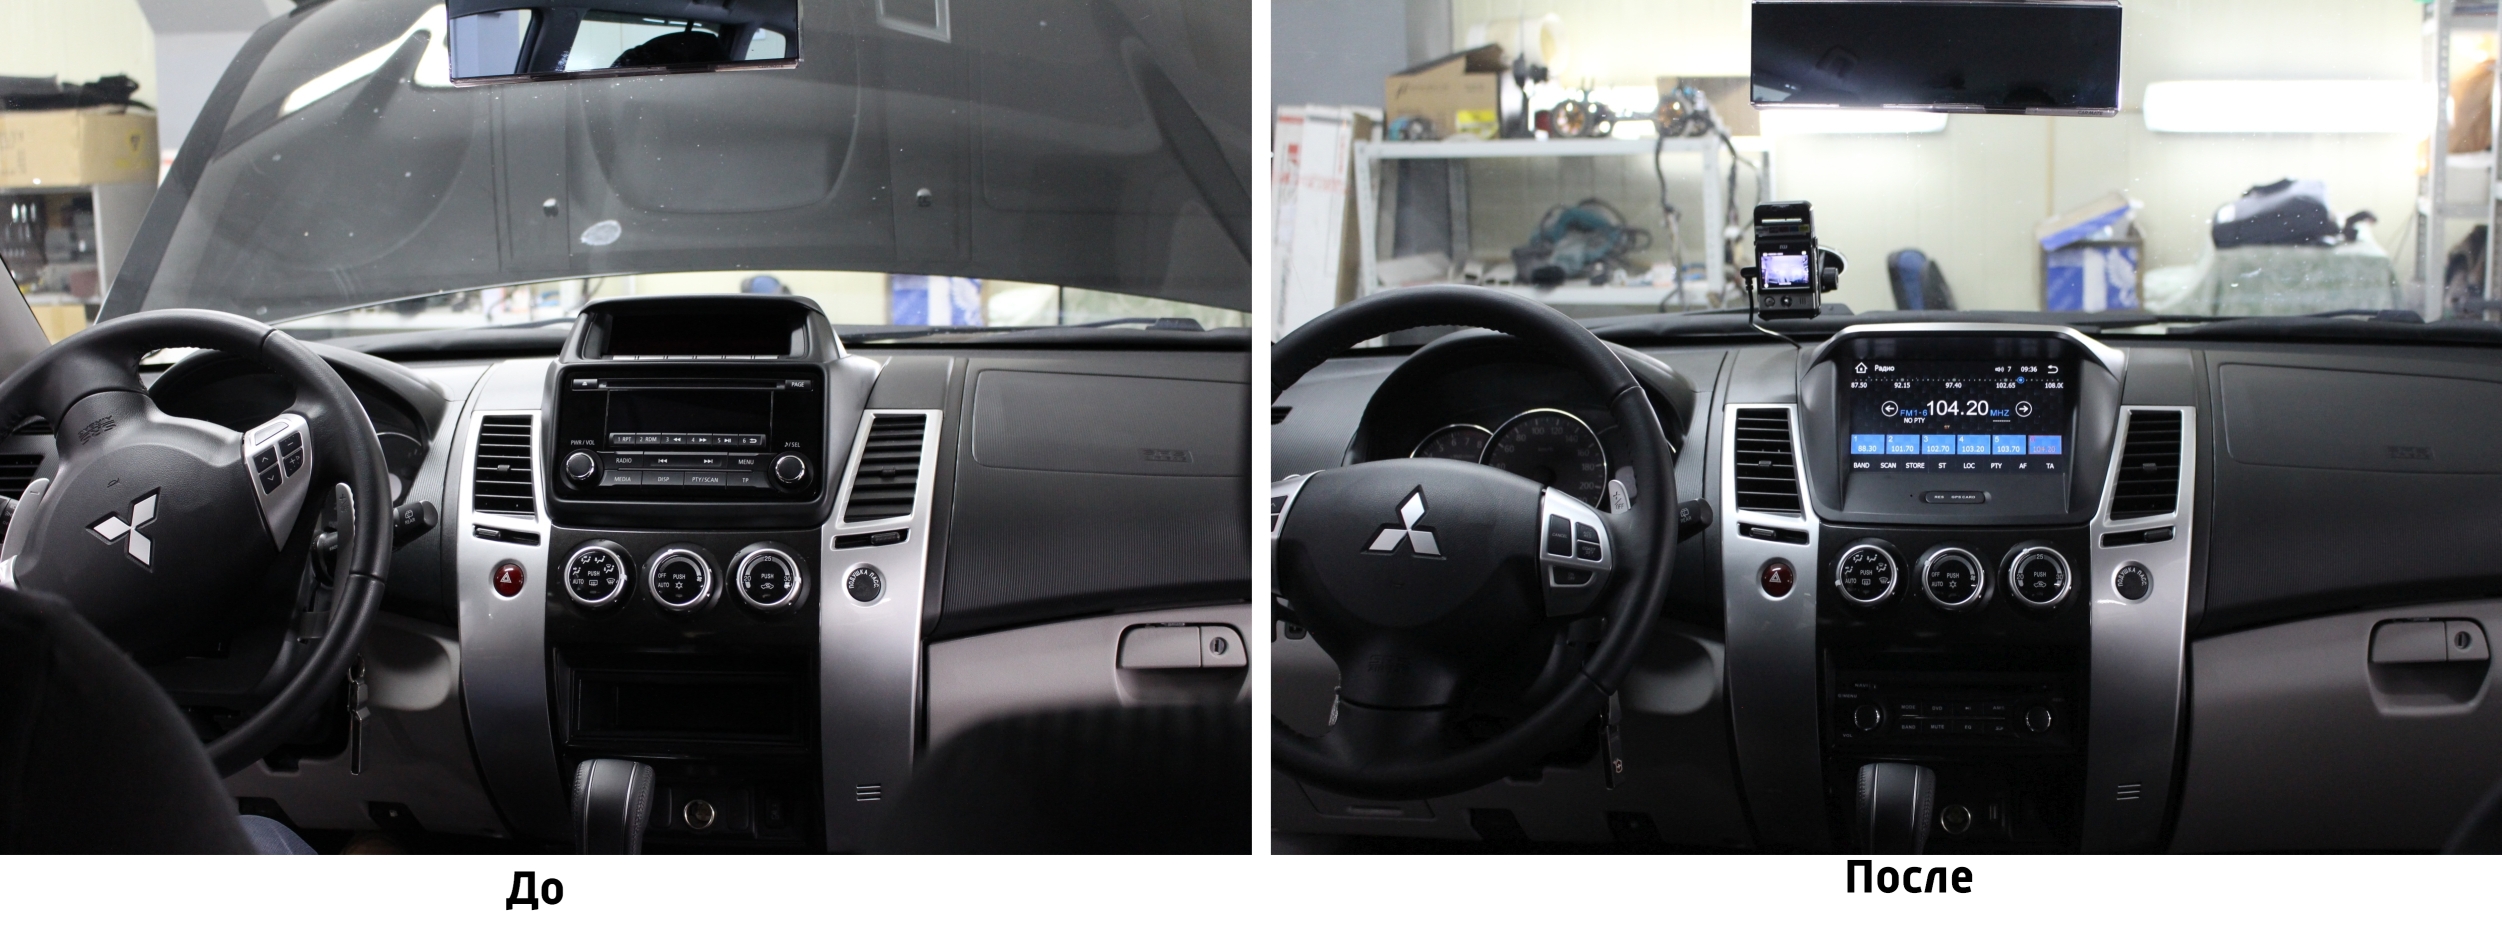 До и после установки головного устройства Ksize DV-SIEL200 на Mitsubishi Pajero Sport  в магазине автозвука и аксессуаров kSize.ru
